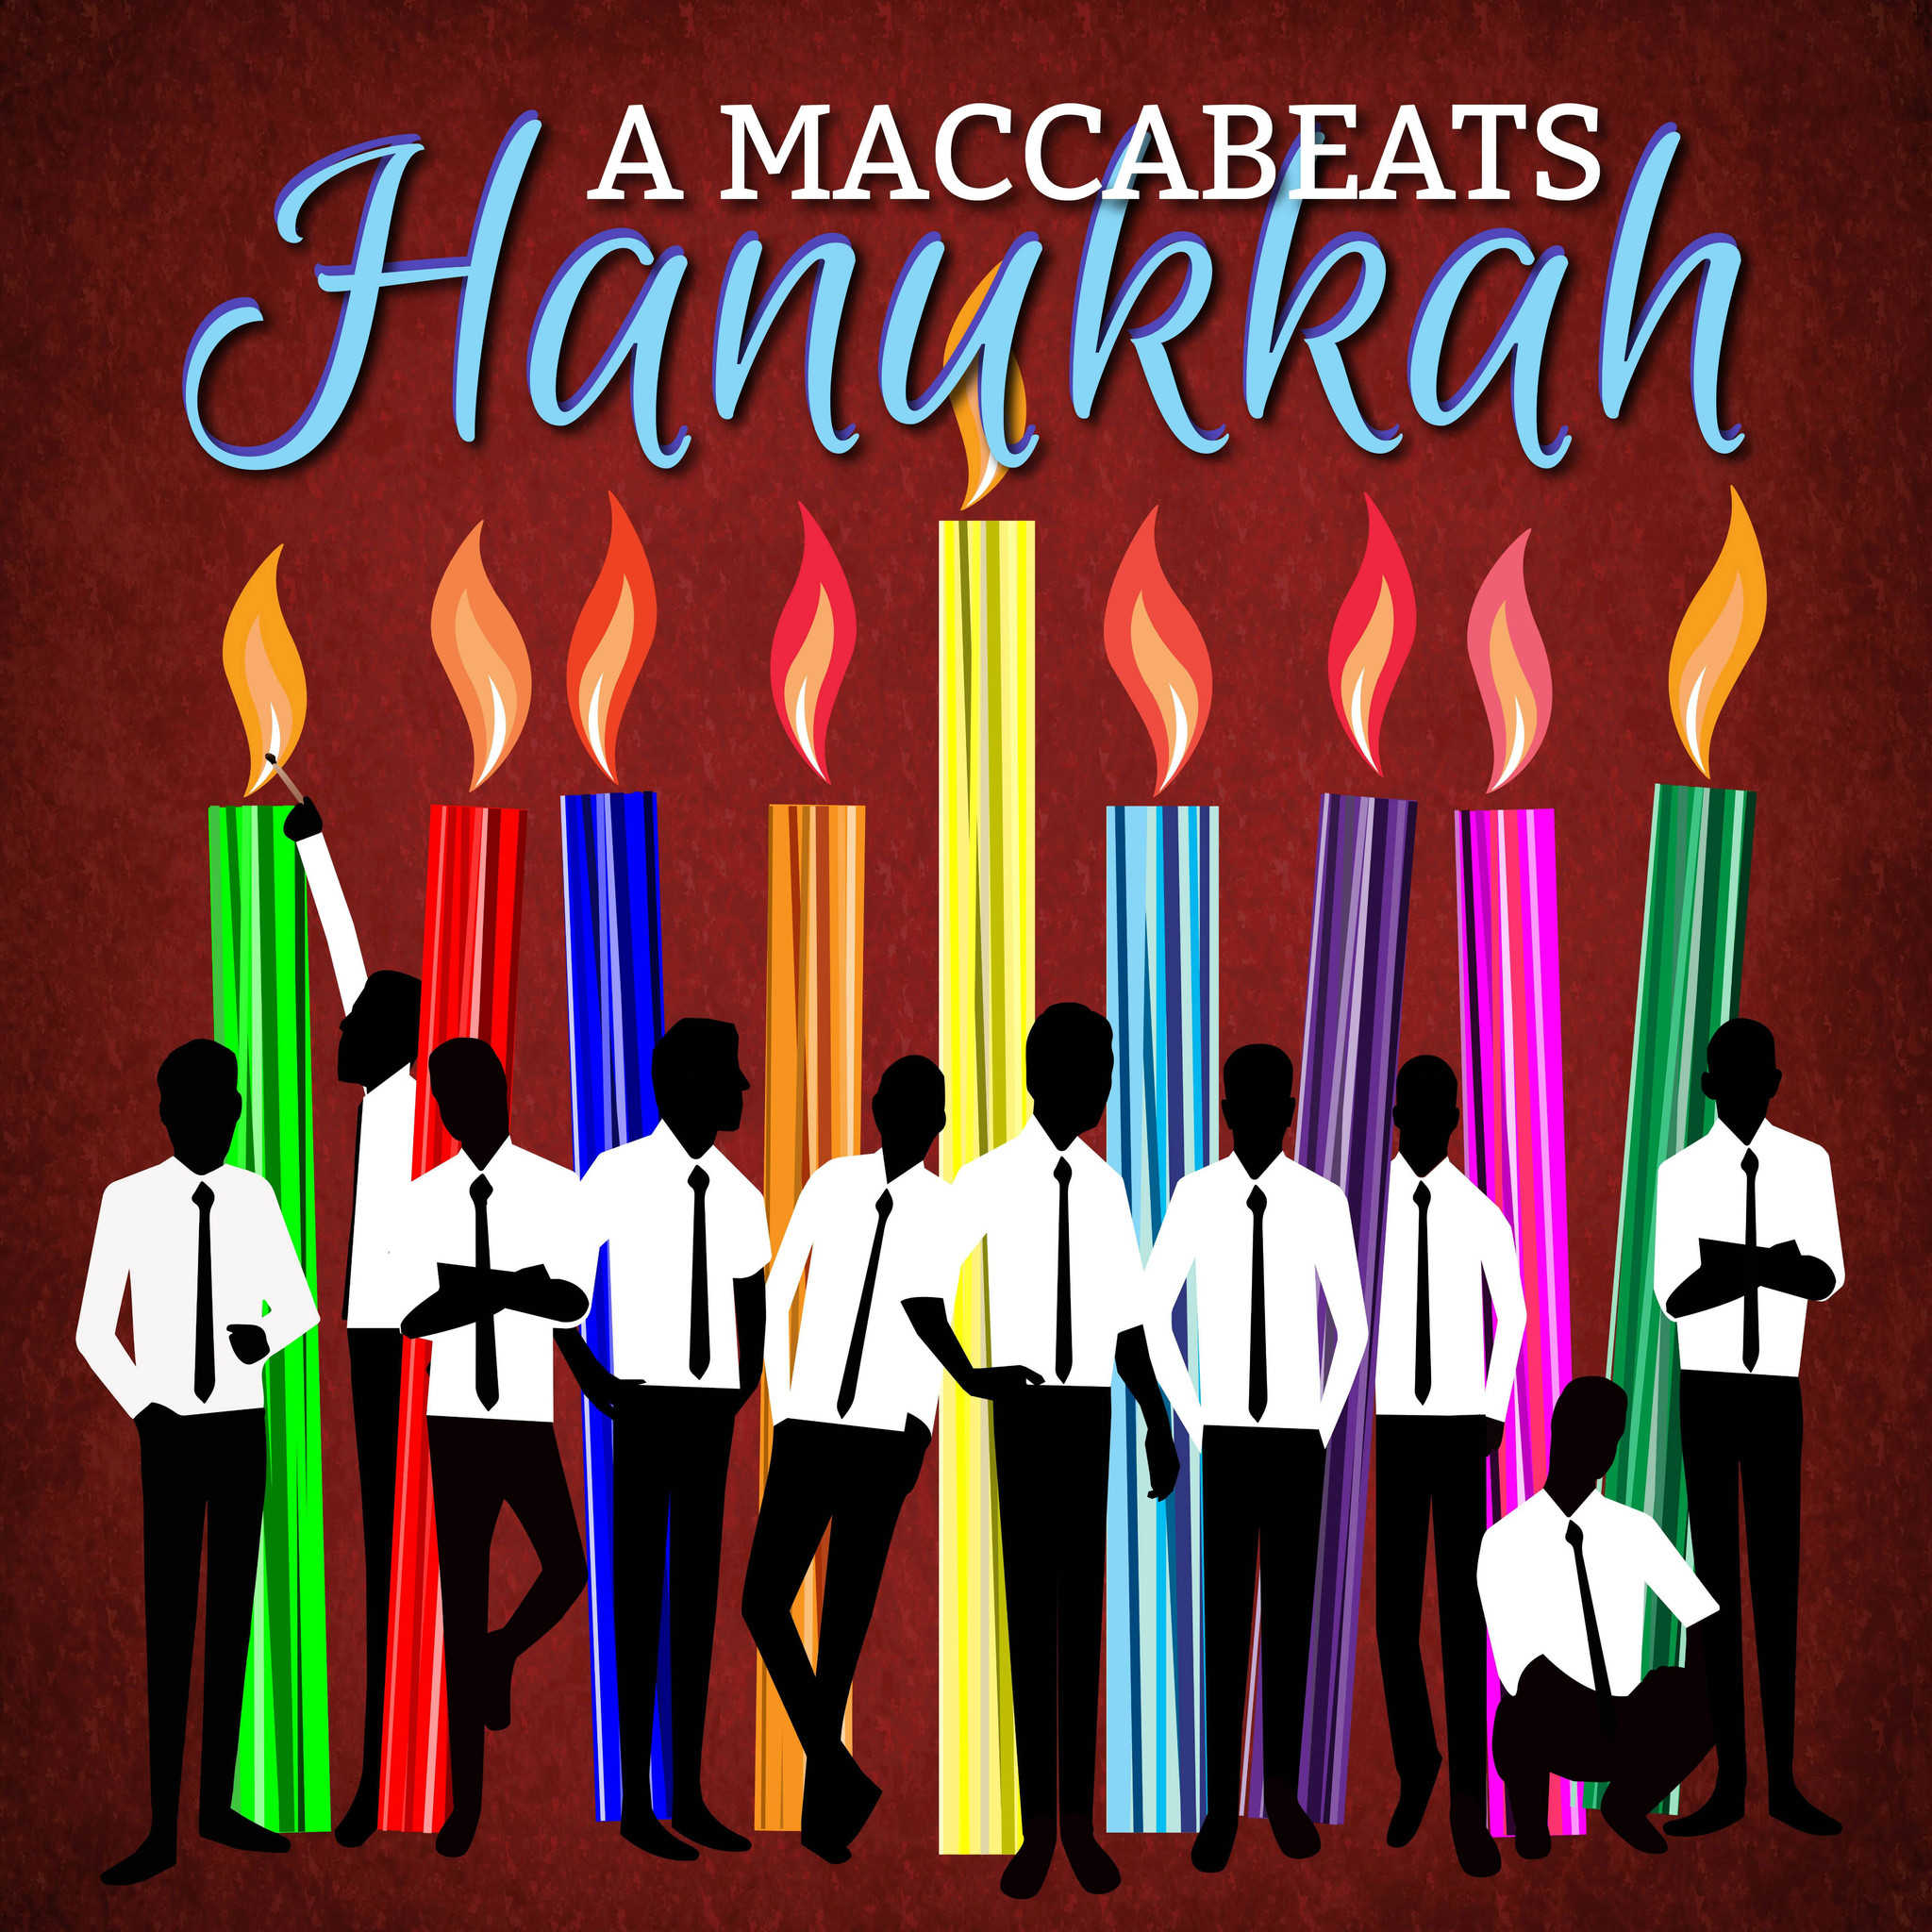 A maccabeats Chanukah